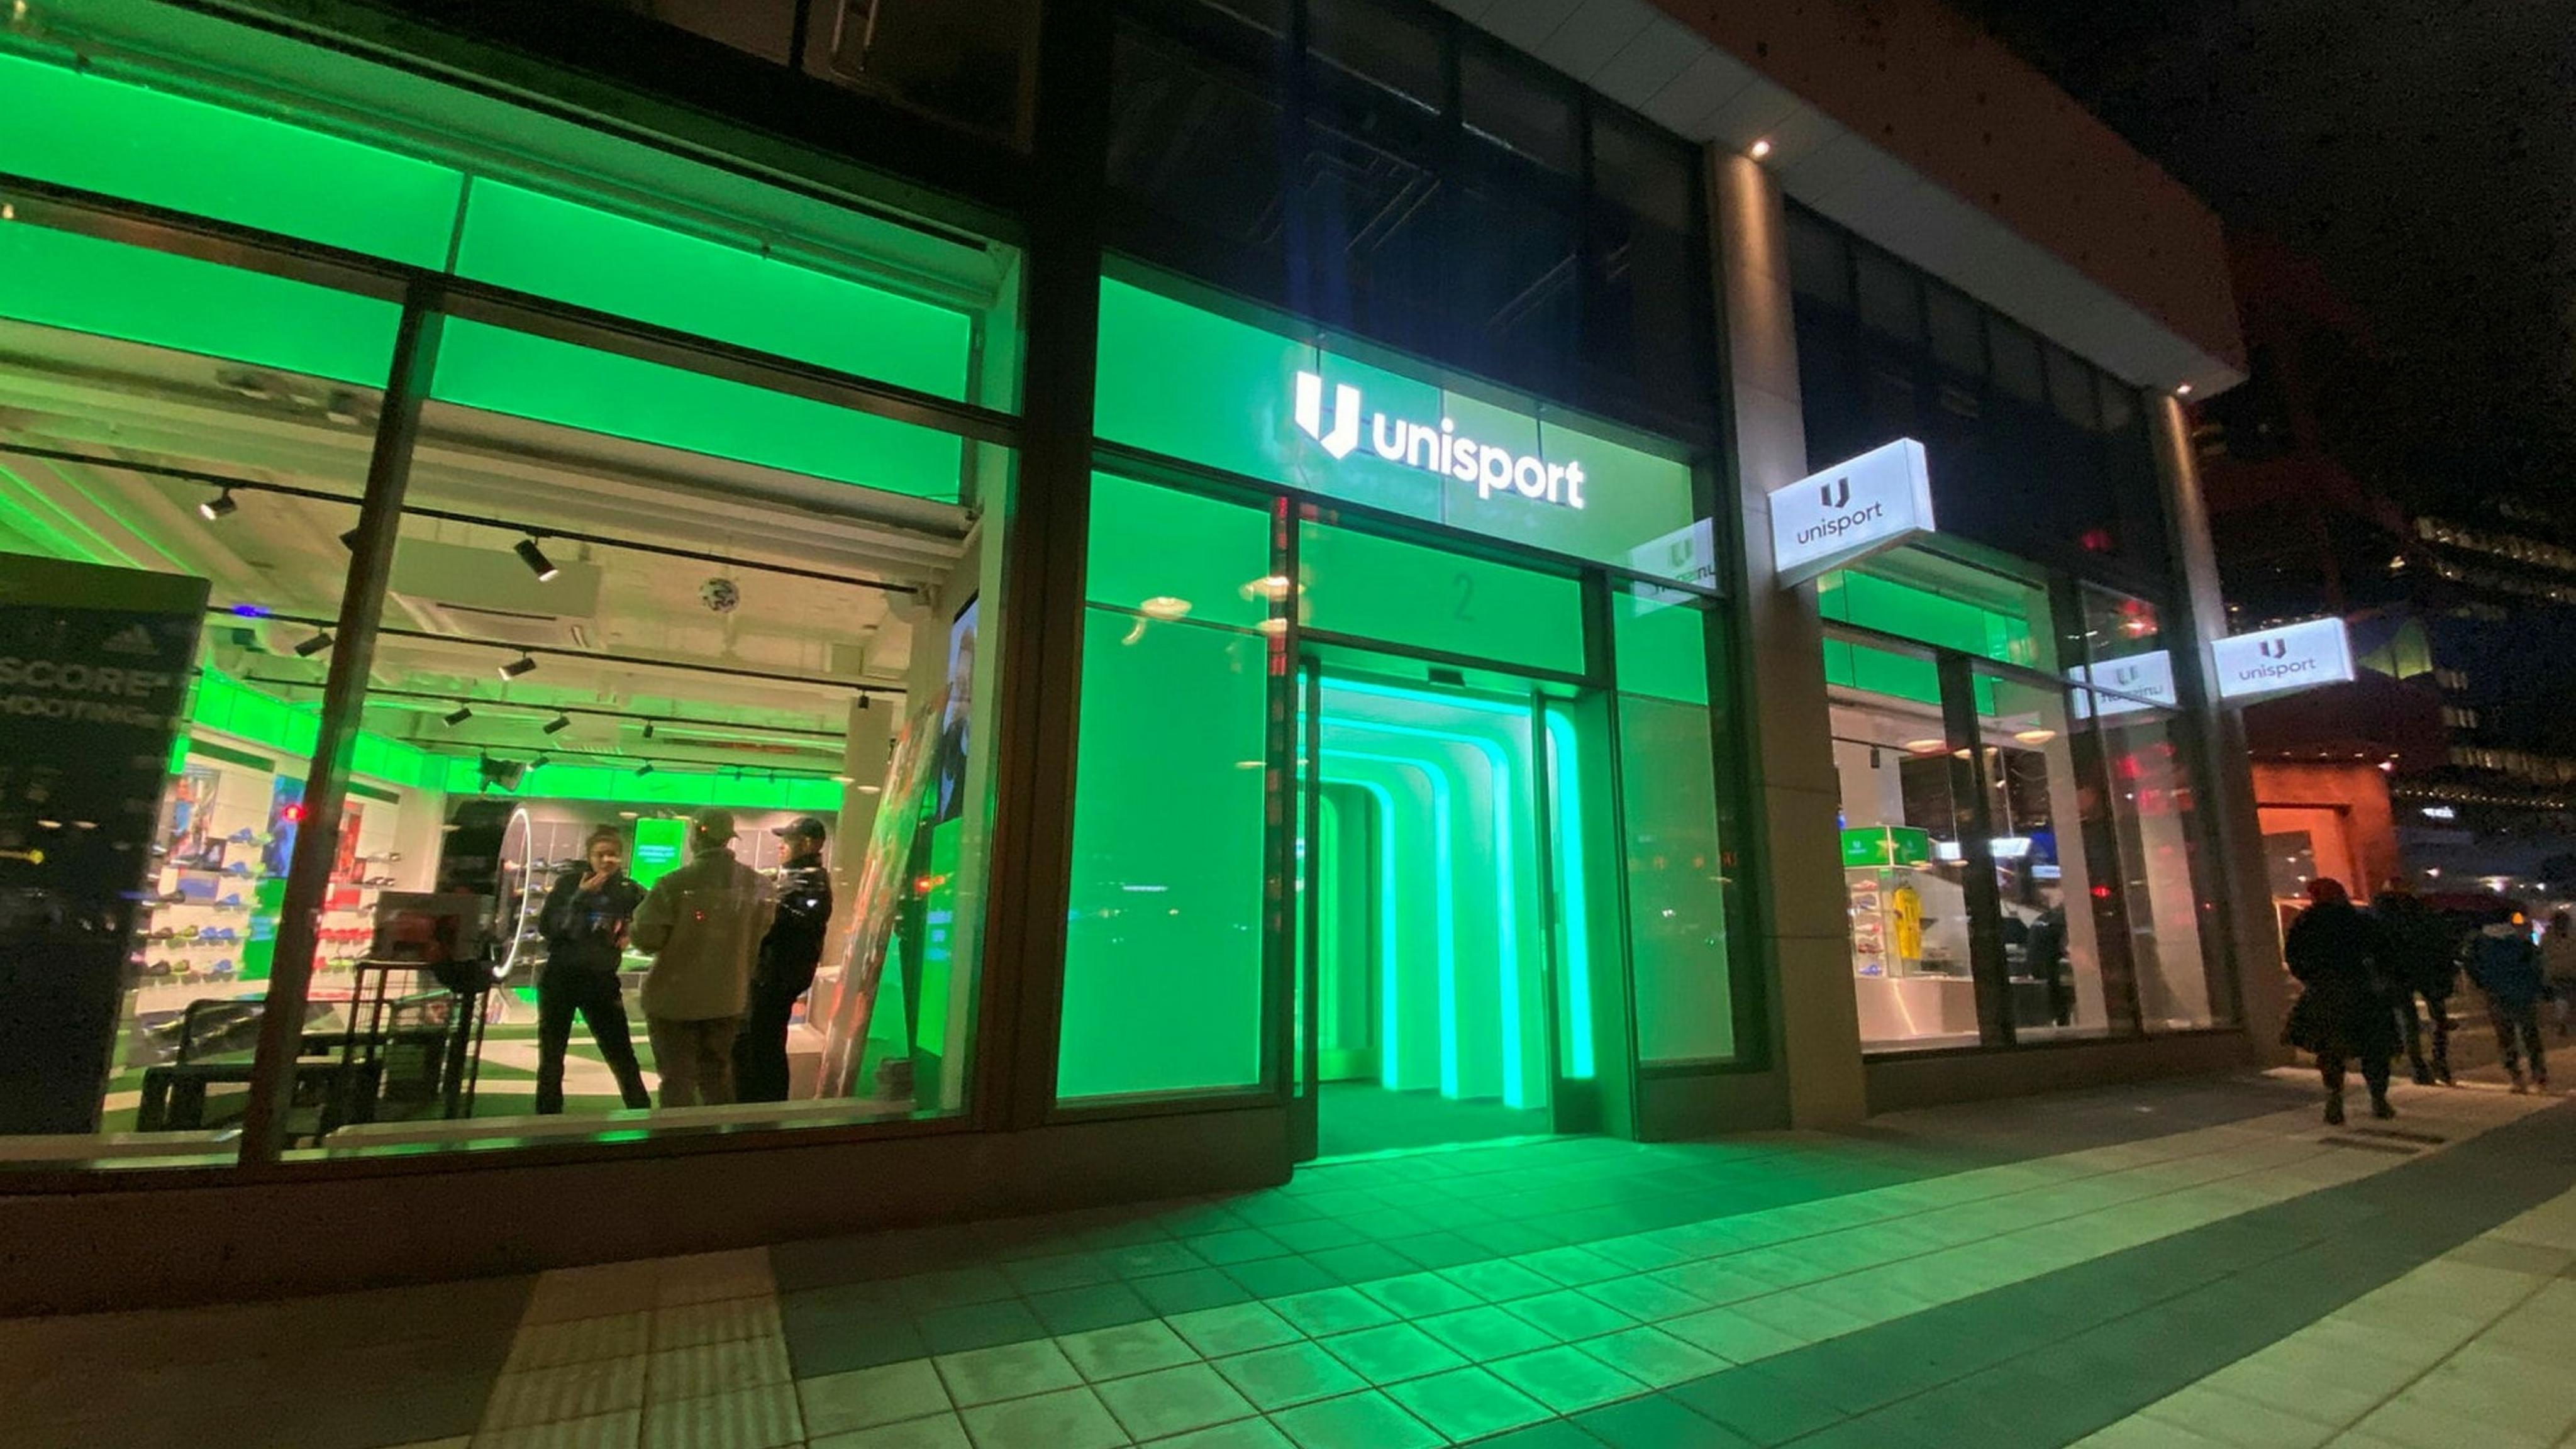 Unisport is making big bets: it opens a shop in Sergels torg